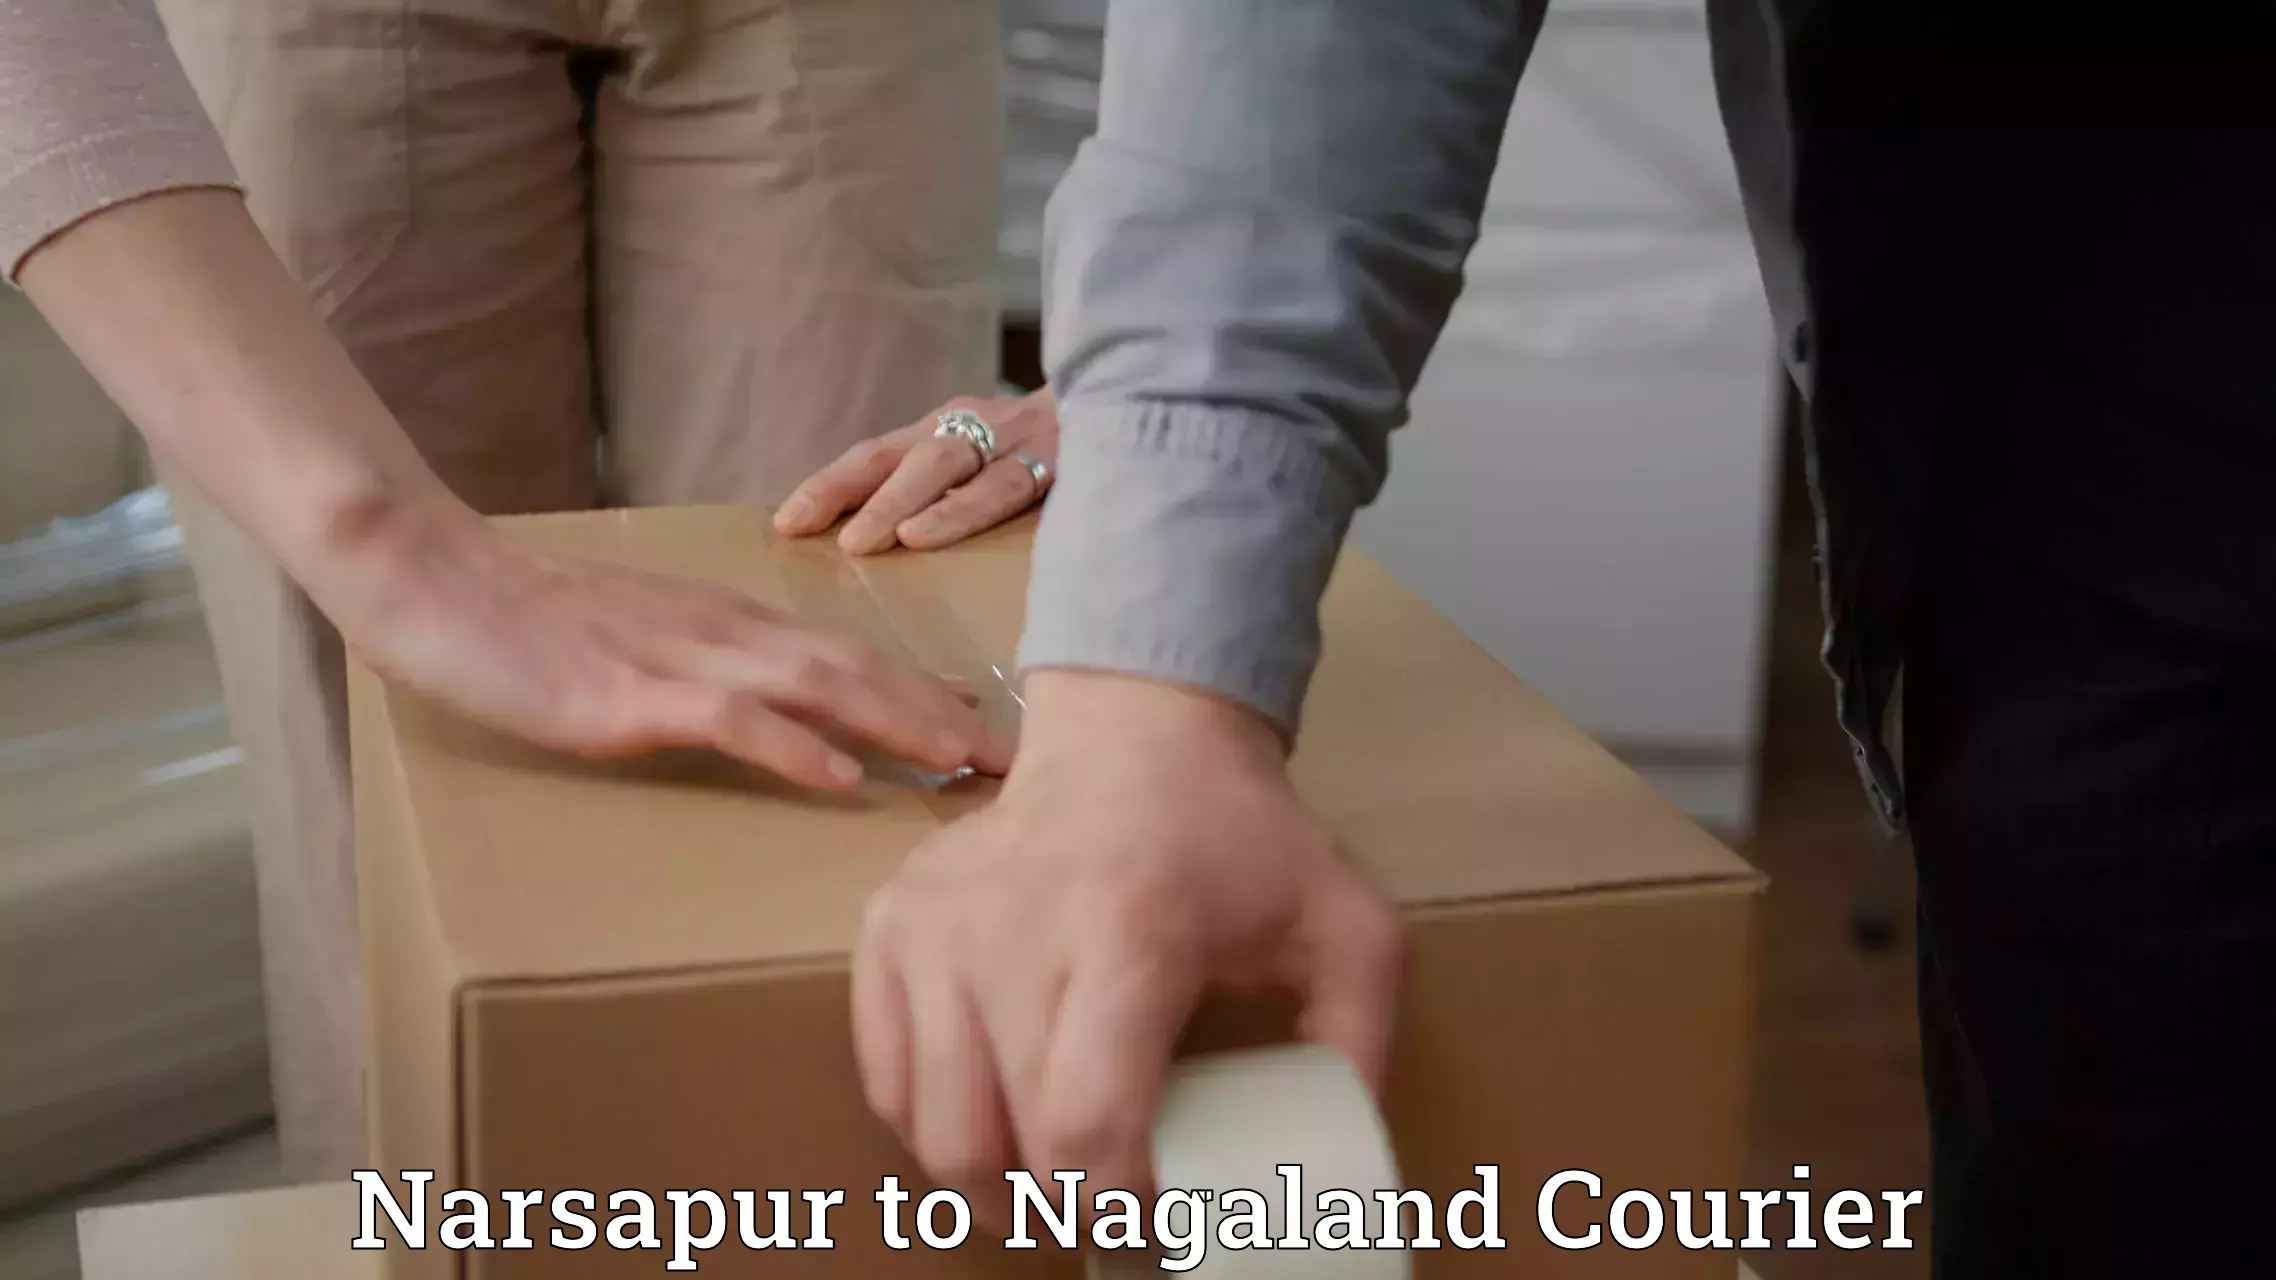 Quick dispatch service Narsapur to Dimapur